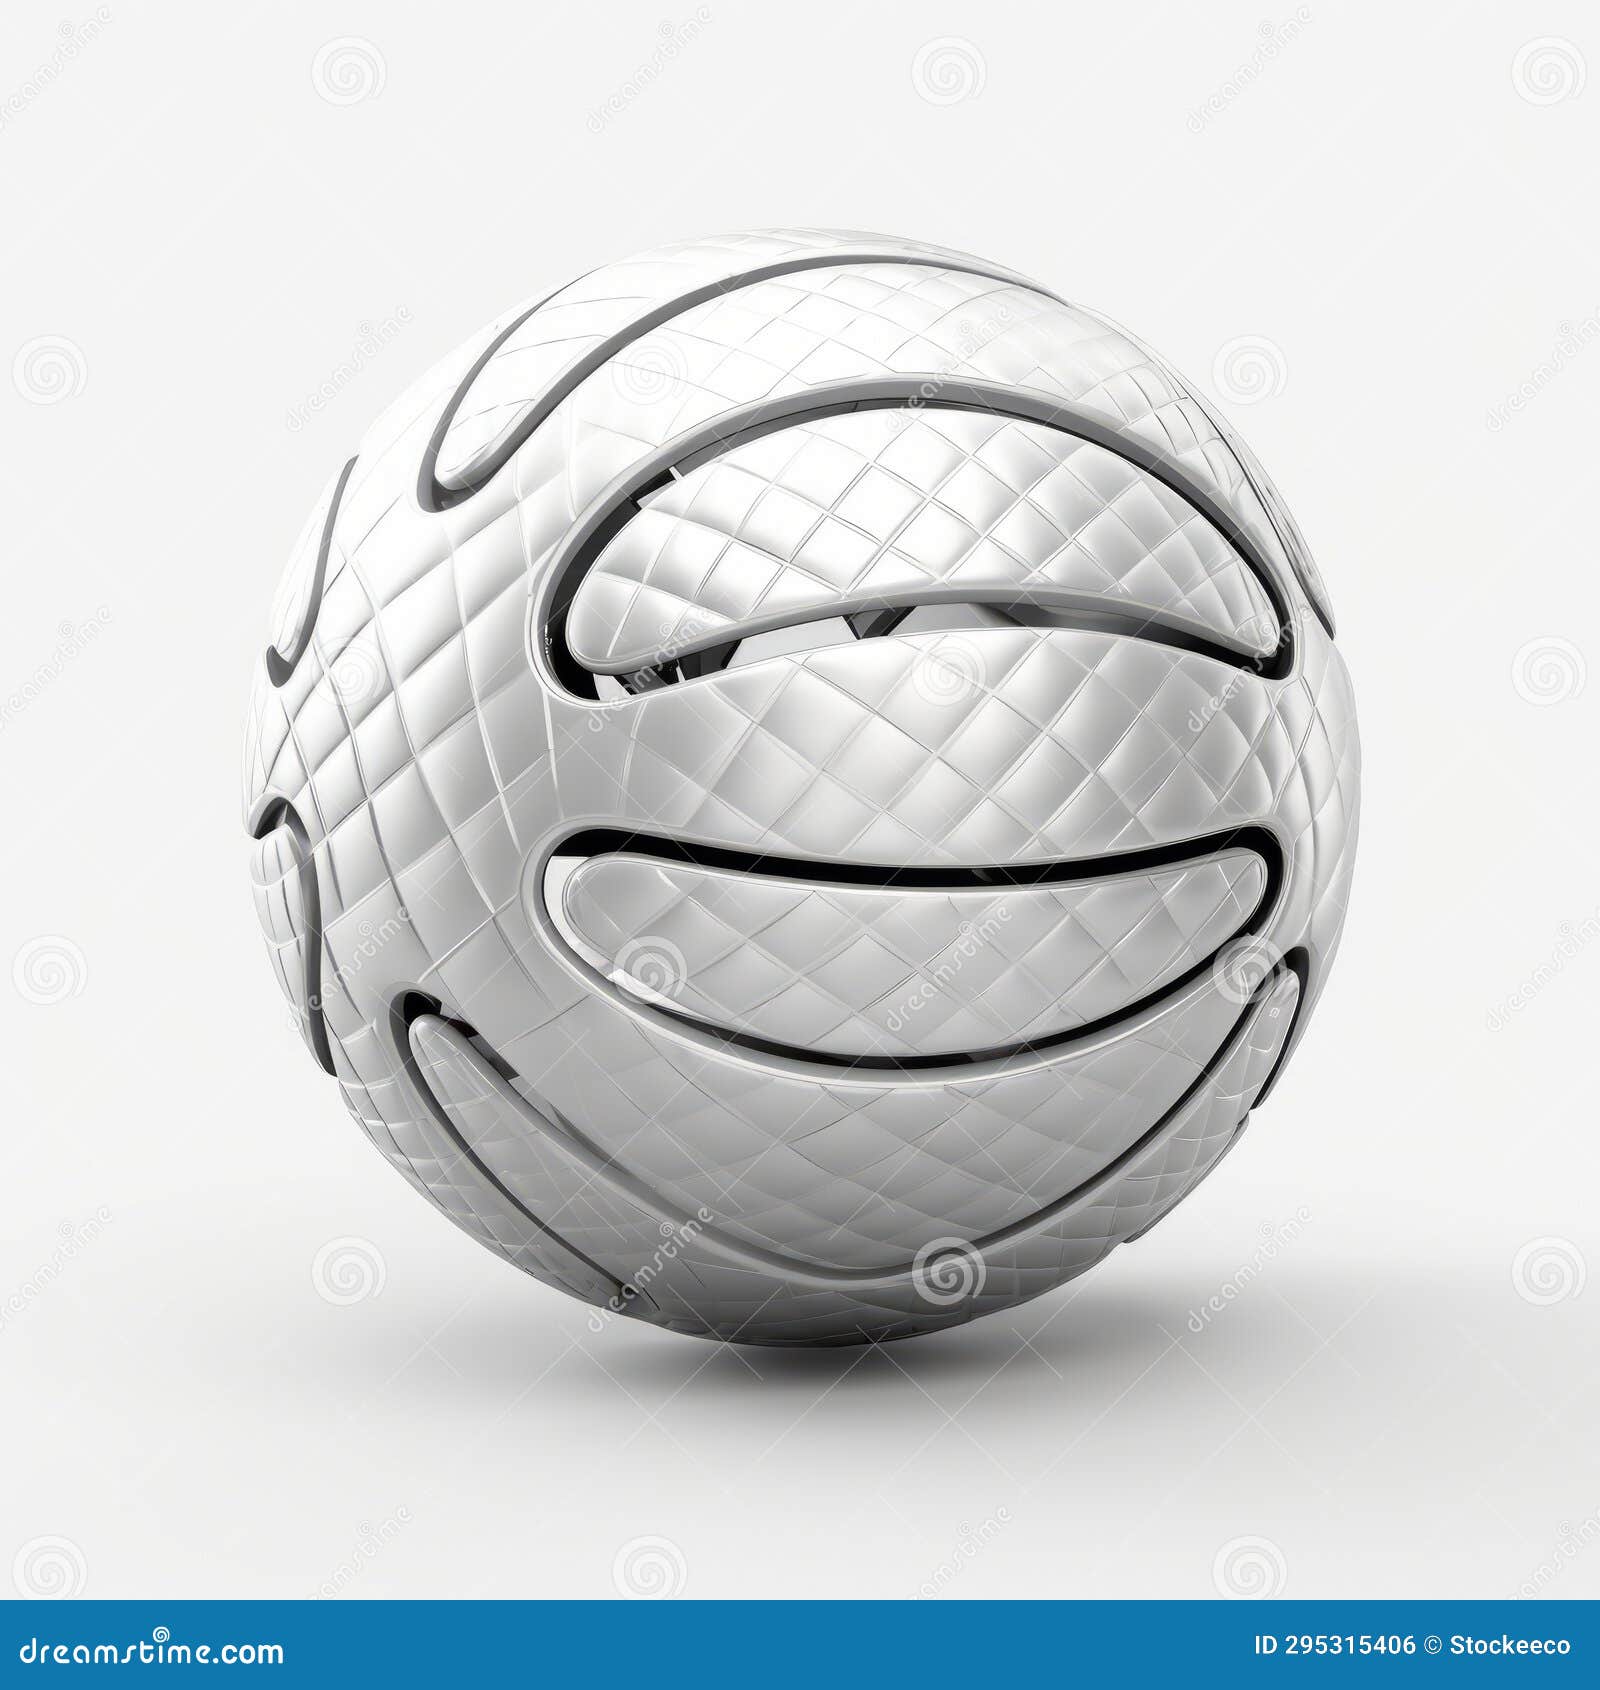 3d basketball ball on white background - bjarke ingels style